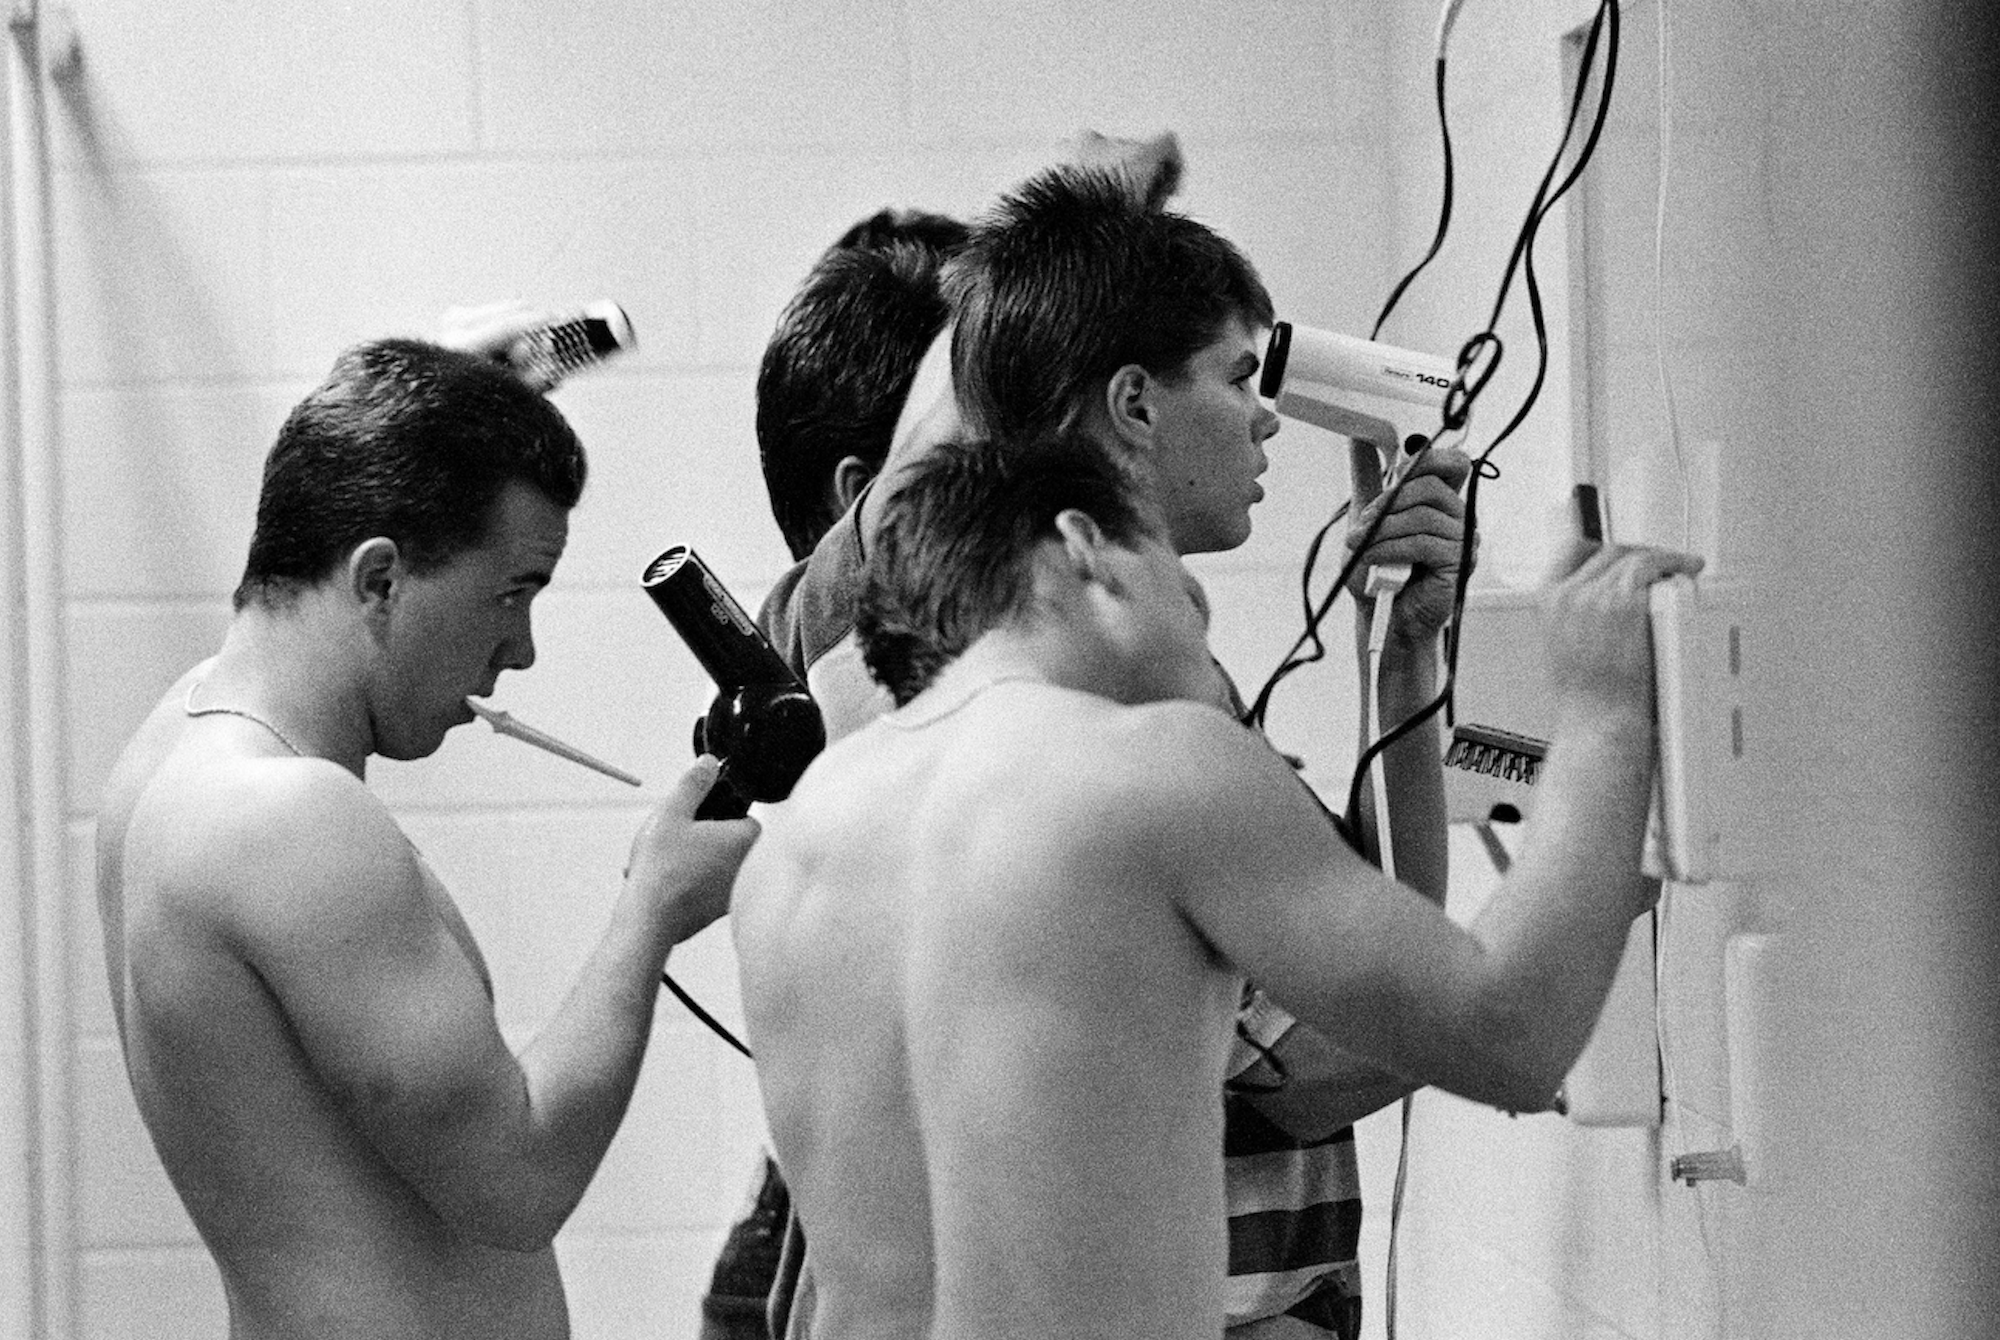 Players dry their hair